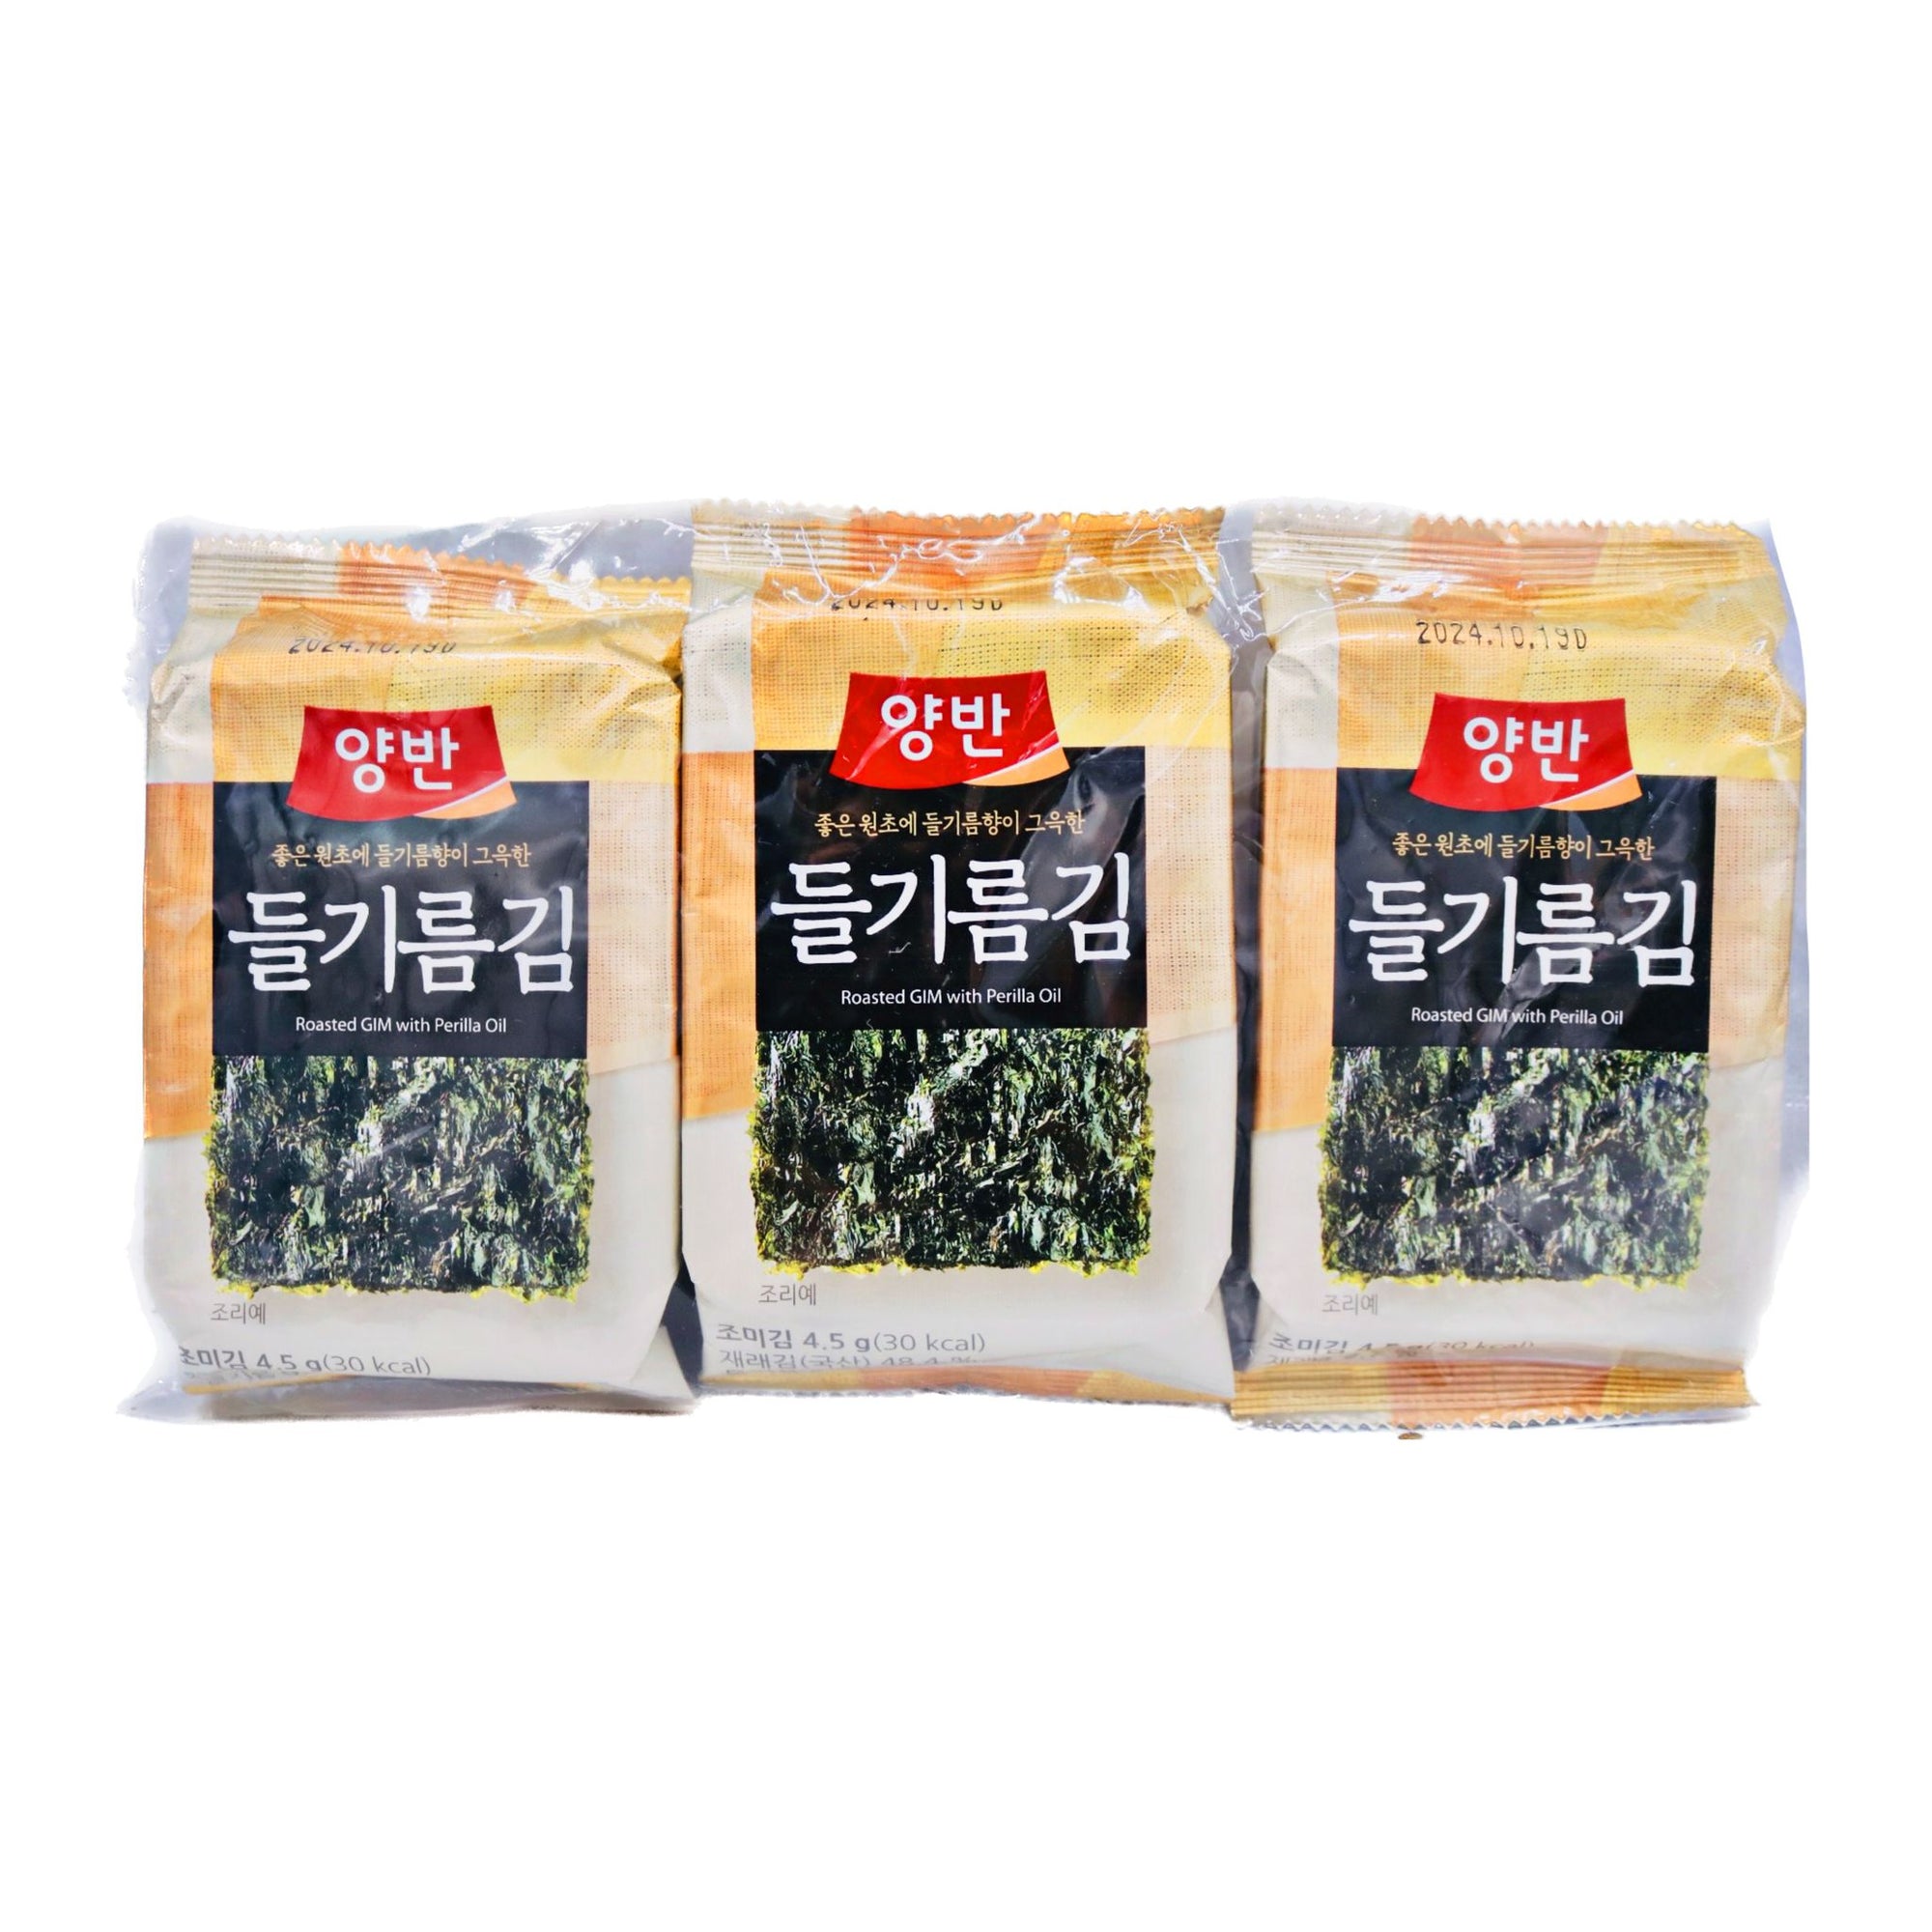 Dongwon Roasted Laver - Perilla Oil (4.5g*3pkgs) 13.5g